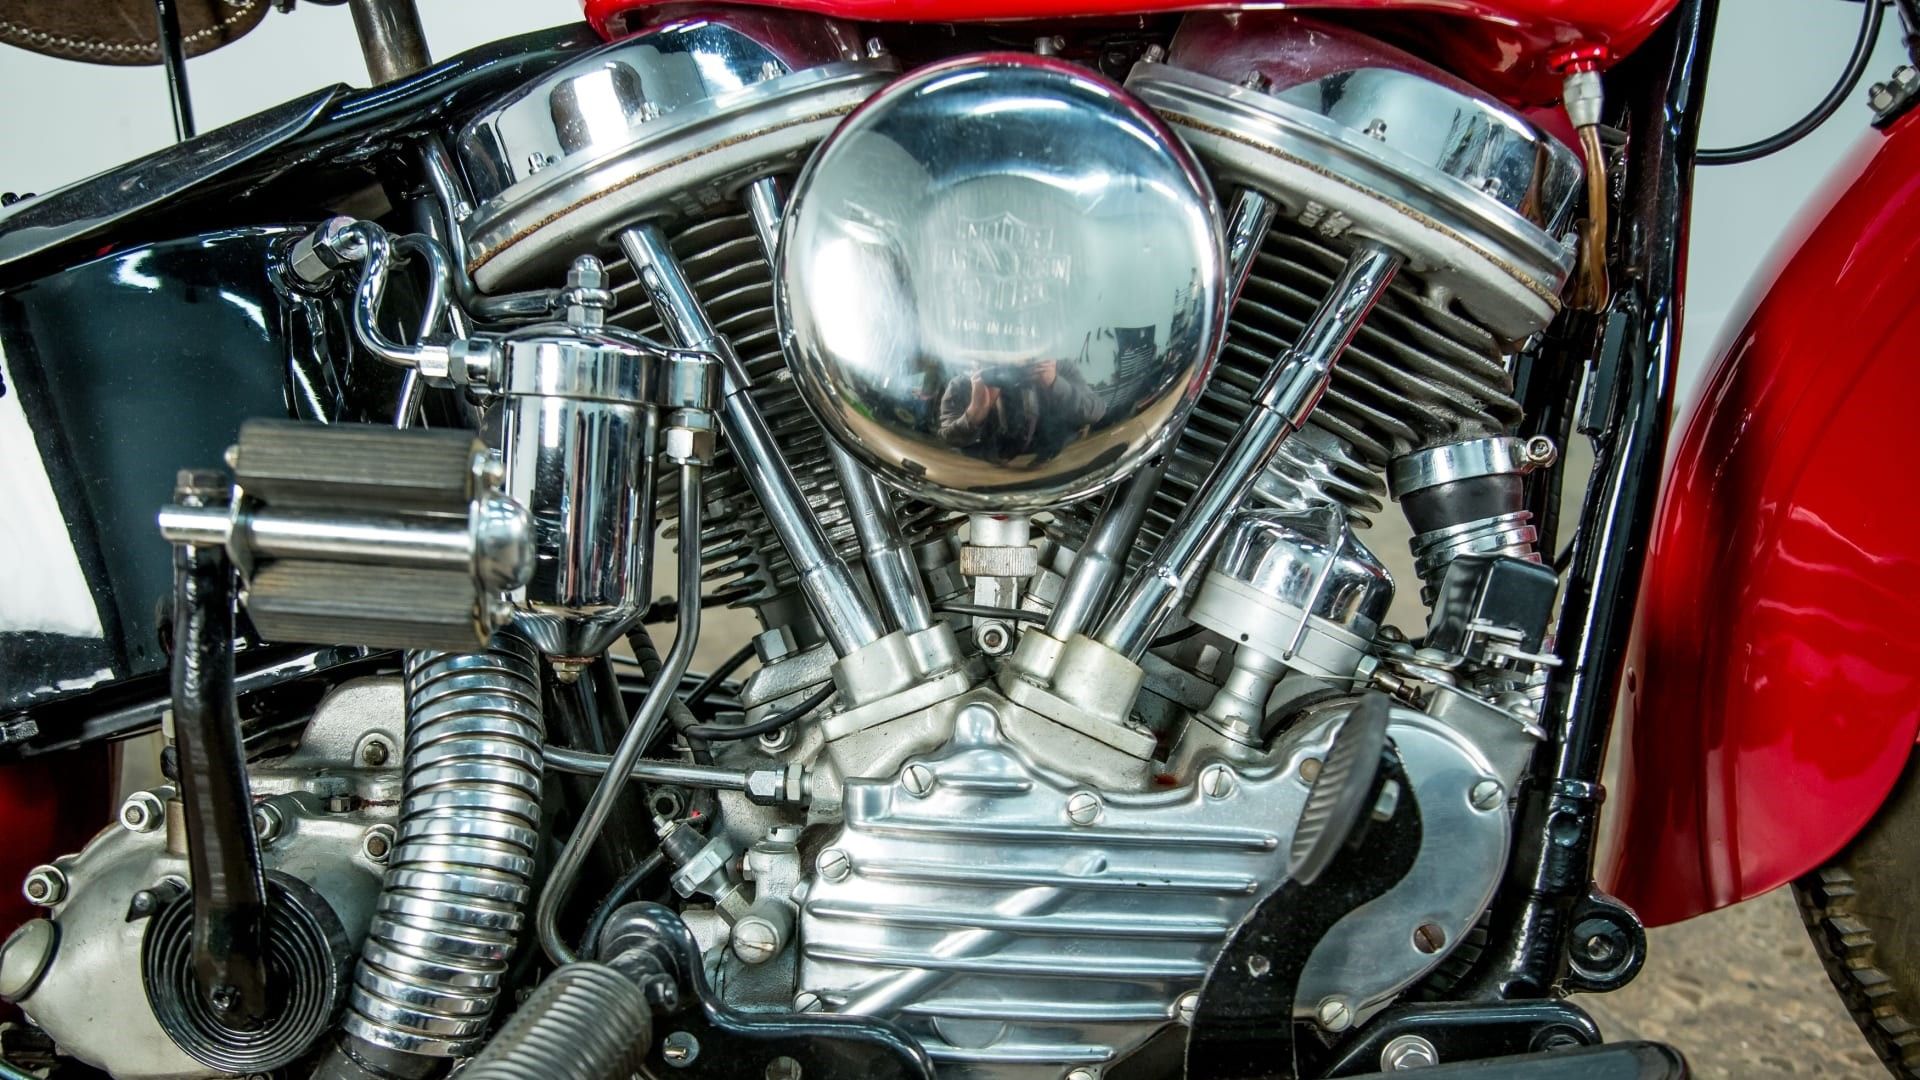 1948 Harley-Davidson Panhead V-Twin engine close-up shot